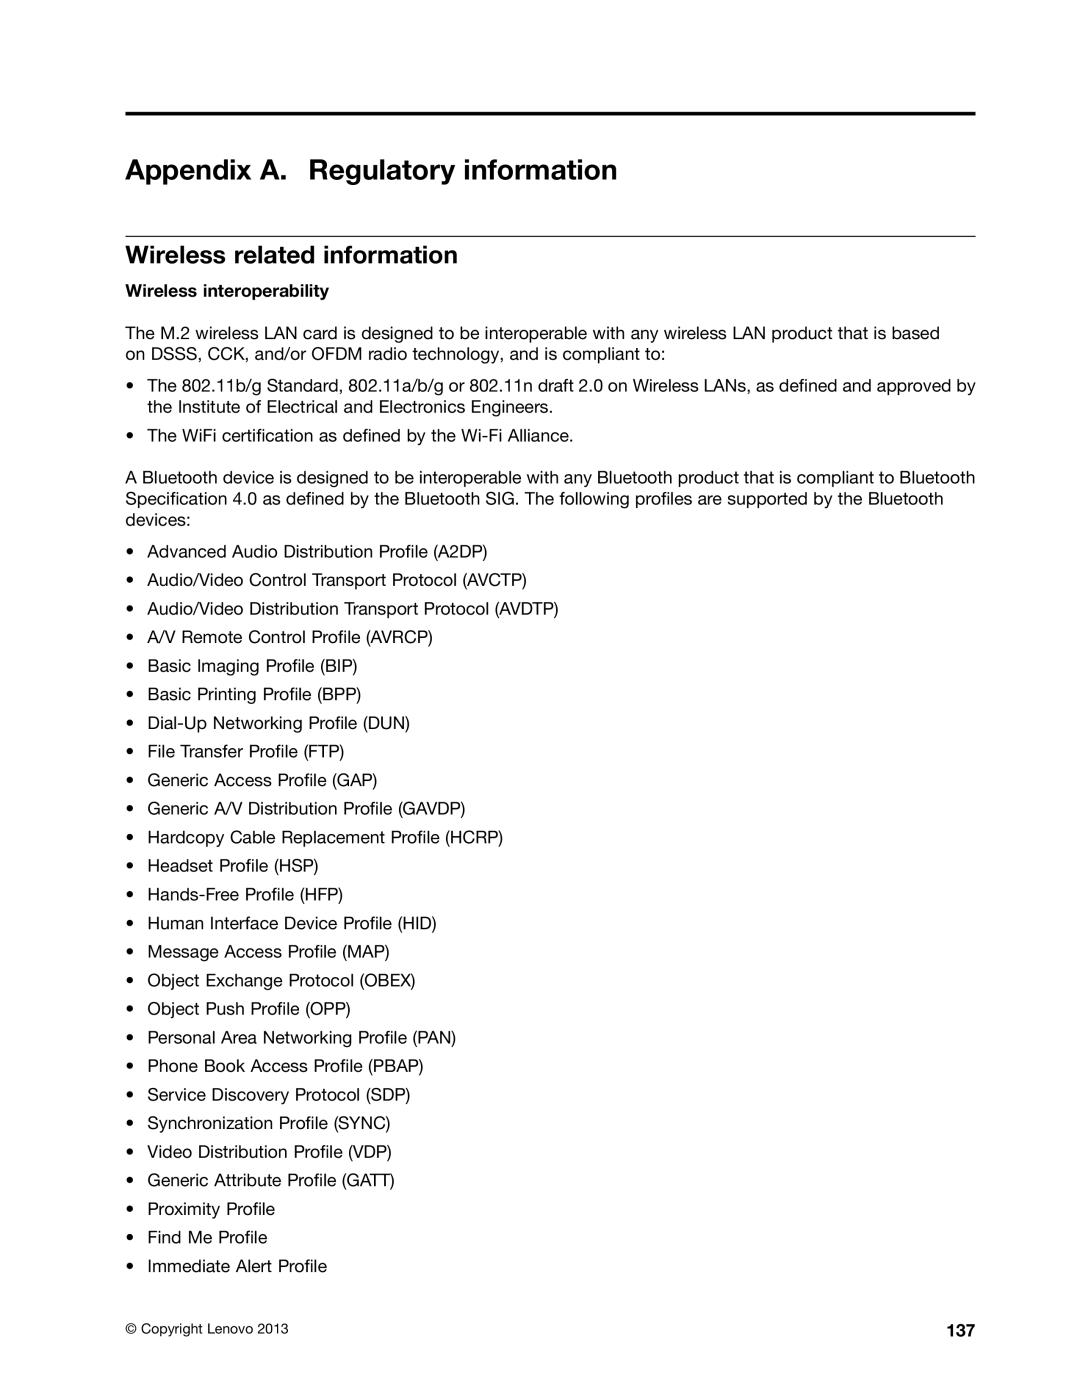 Lenovo 20AA000BUS, T431s Appendix A. Regulatory information, Wireless related information, Wireless interoperability, 137 